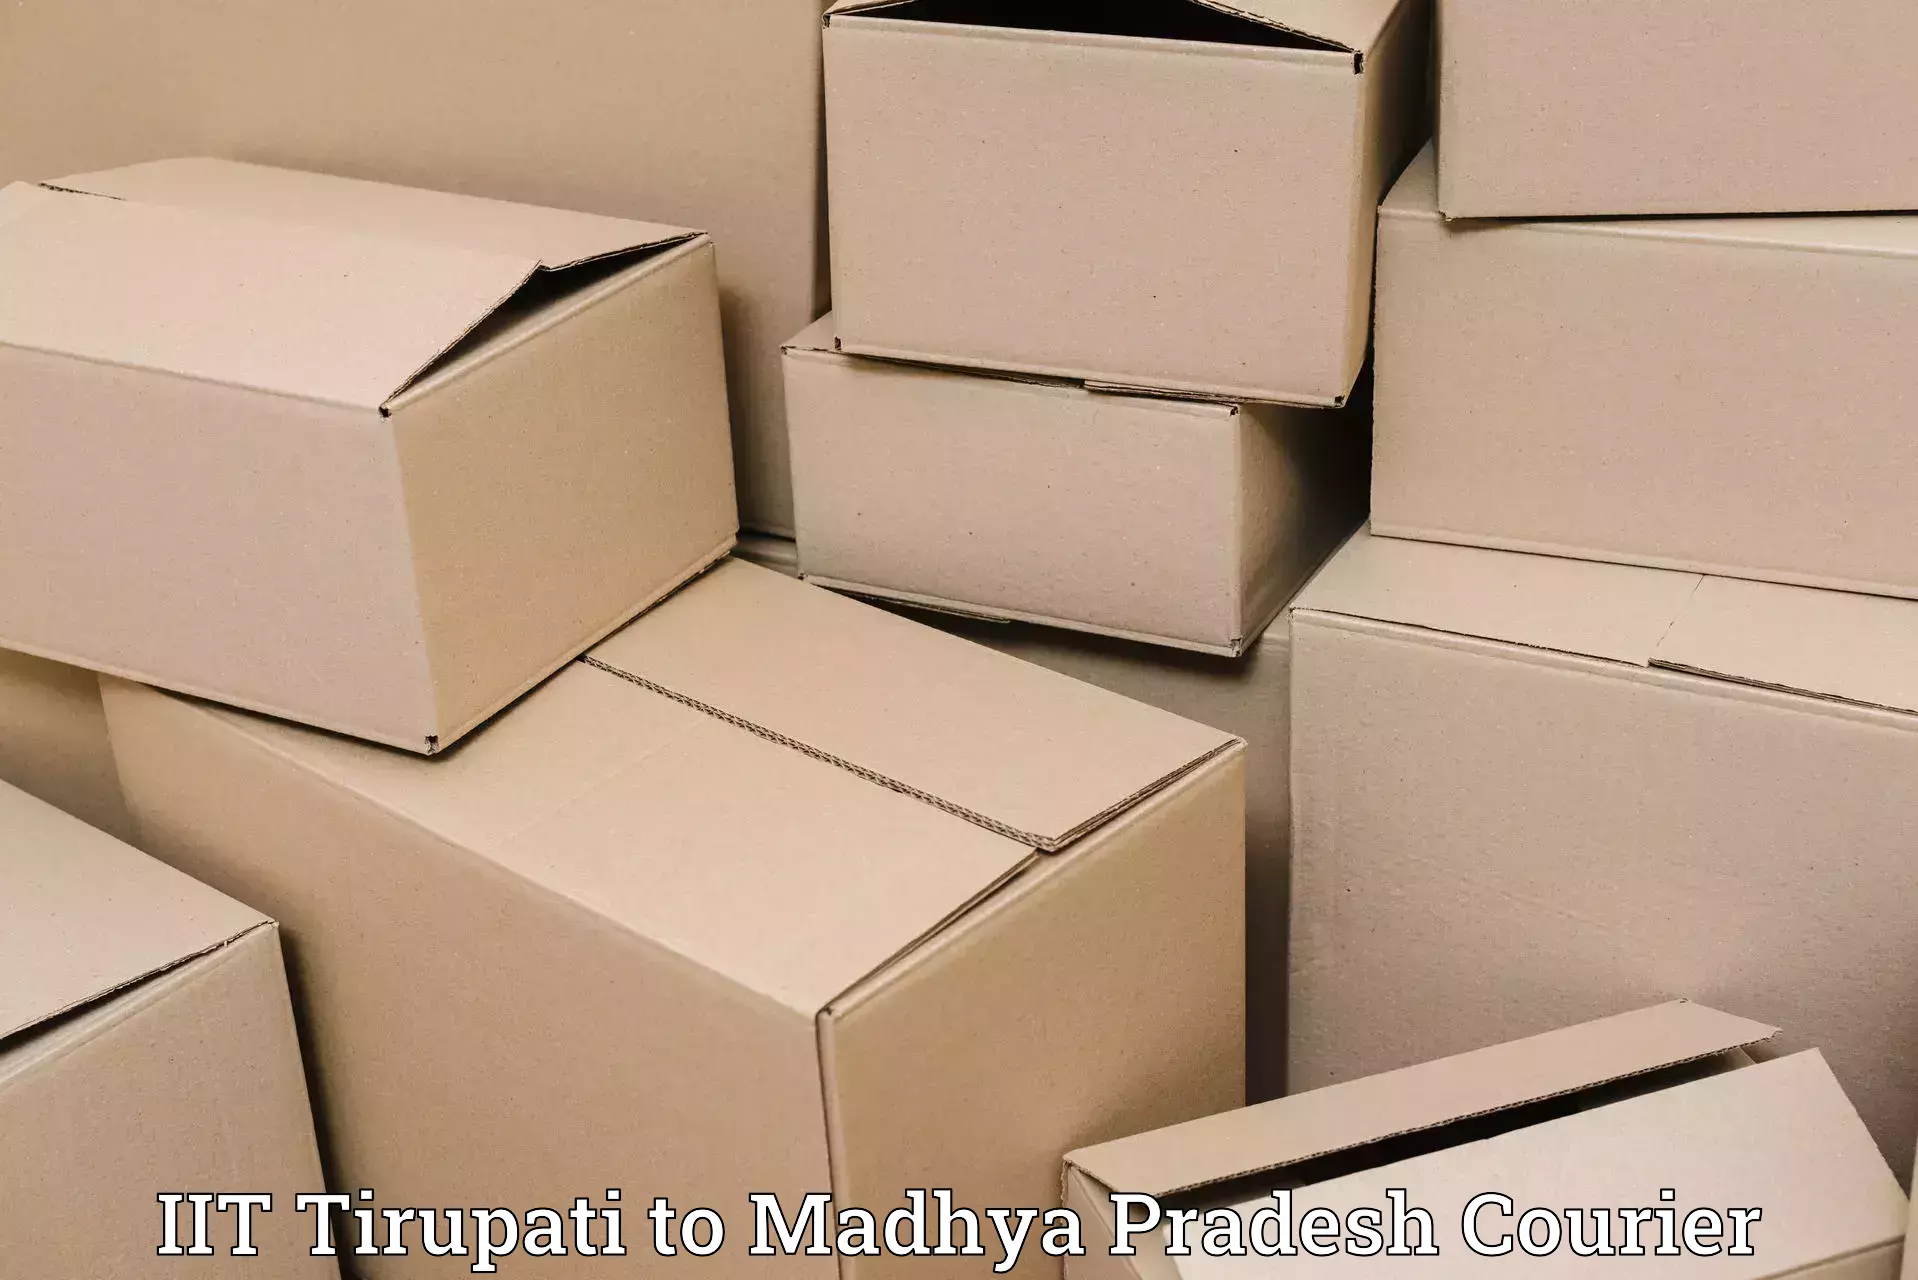 Small business couriers IIT Tirupati to Rewa